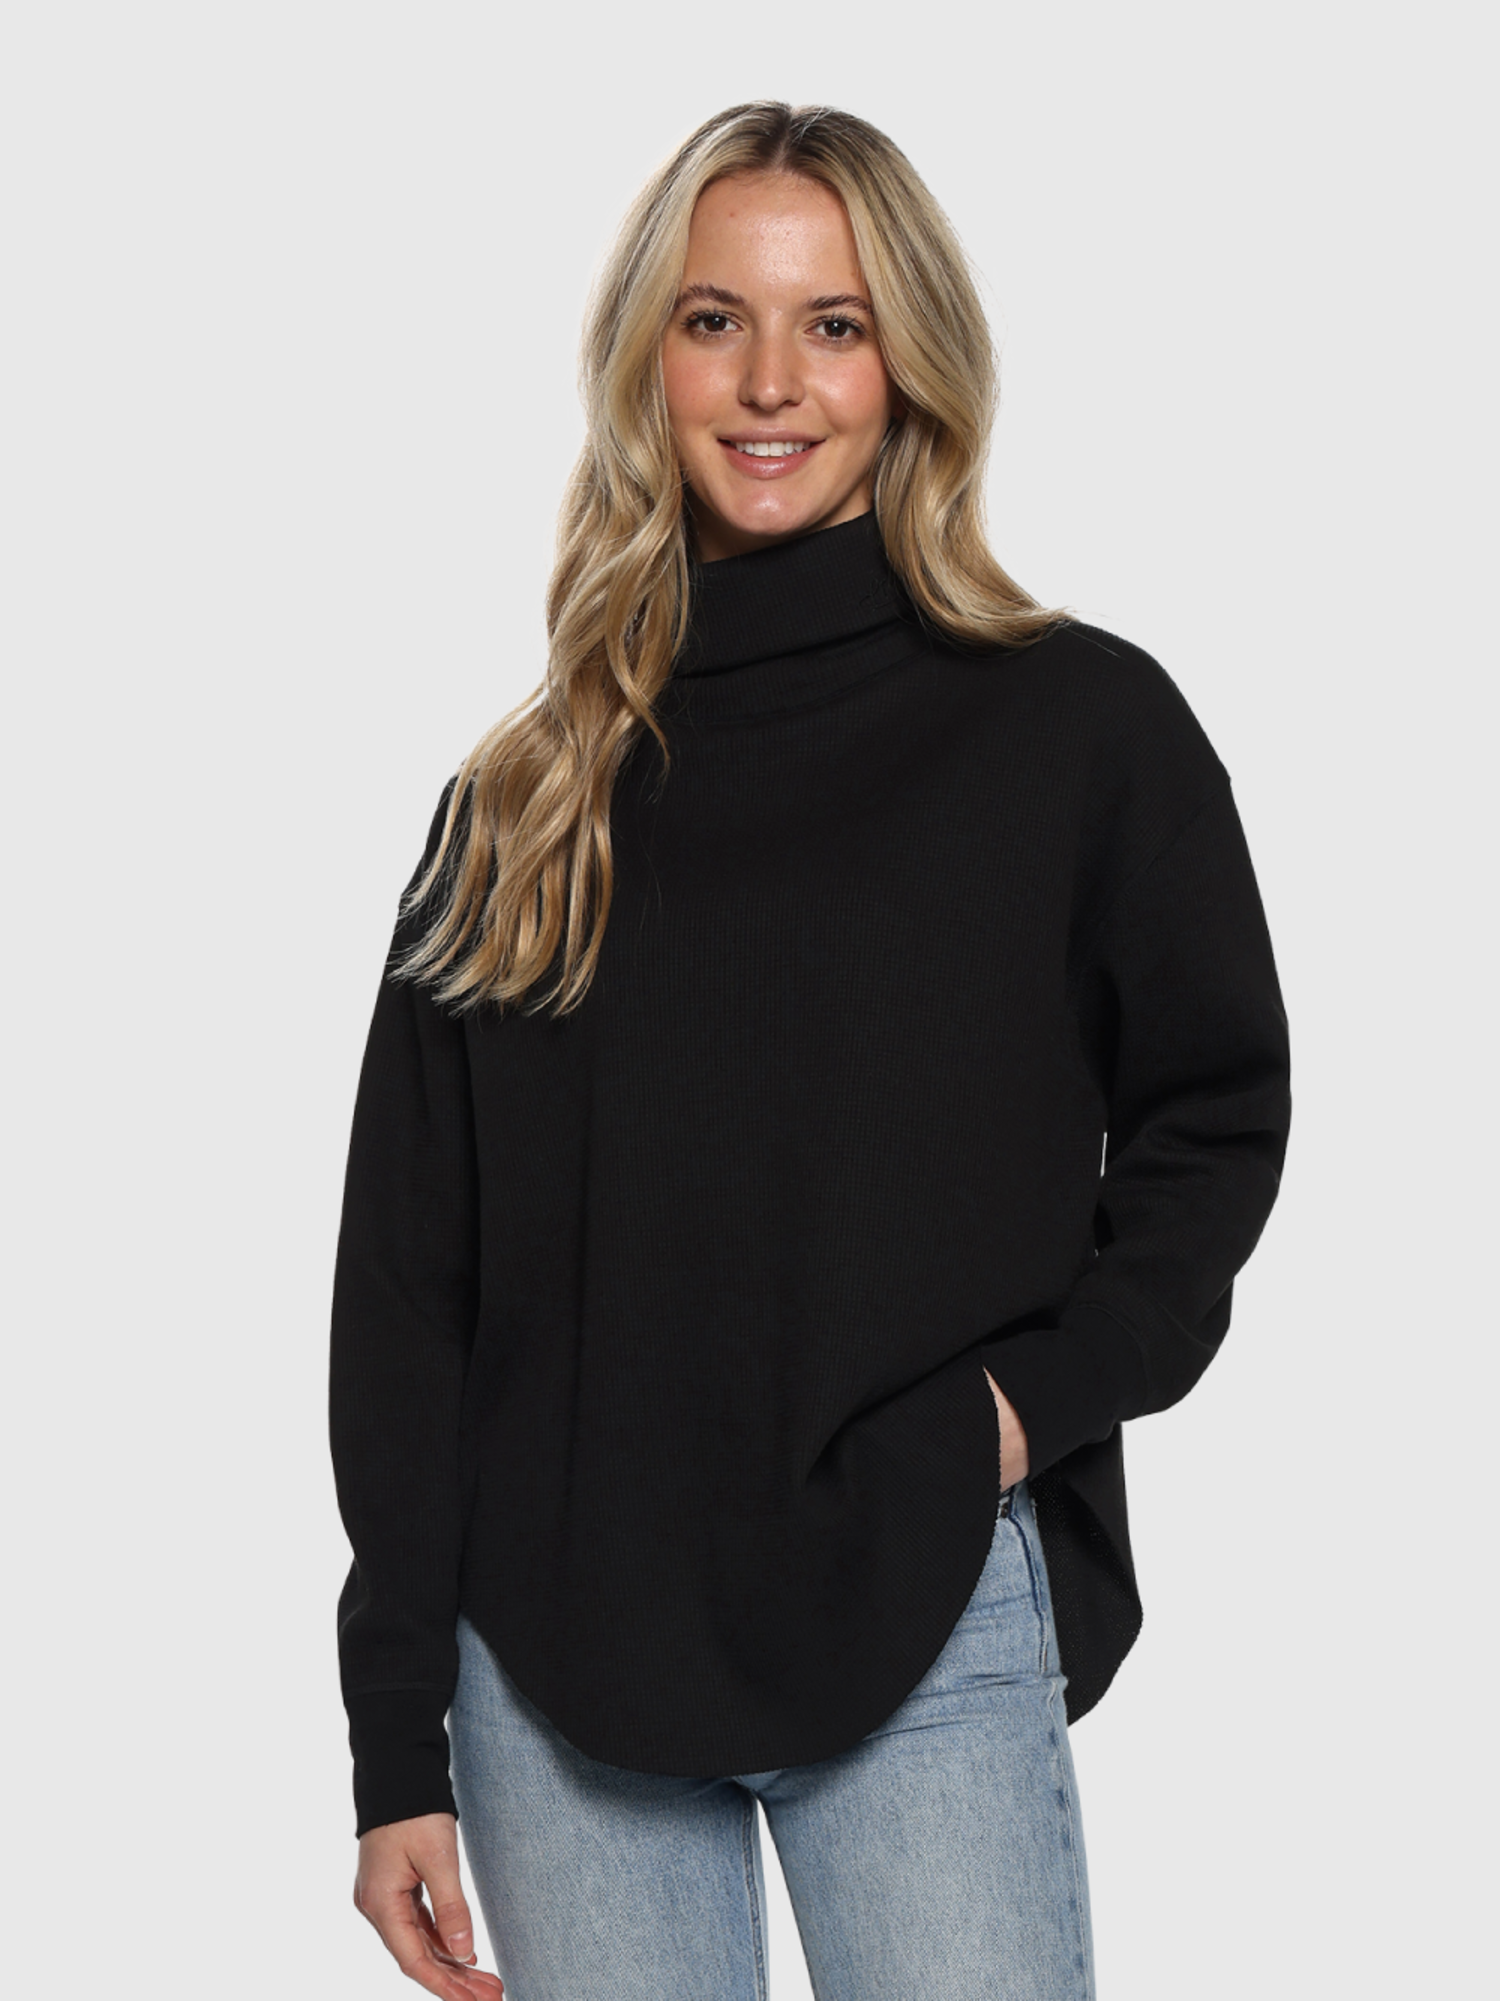 Black Turtleneck Sweater Women